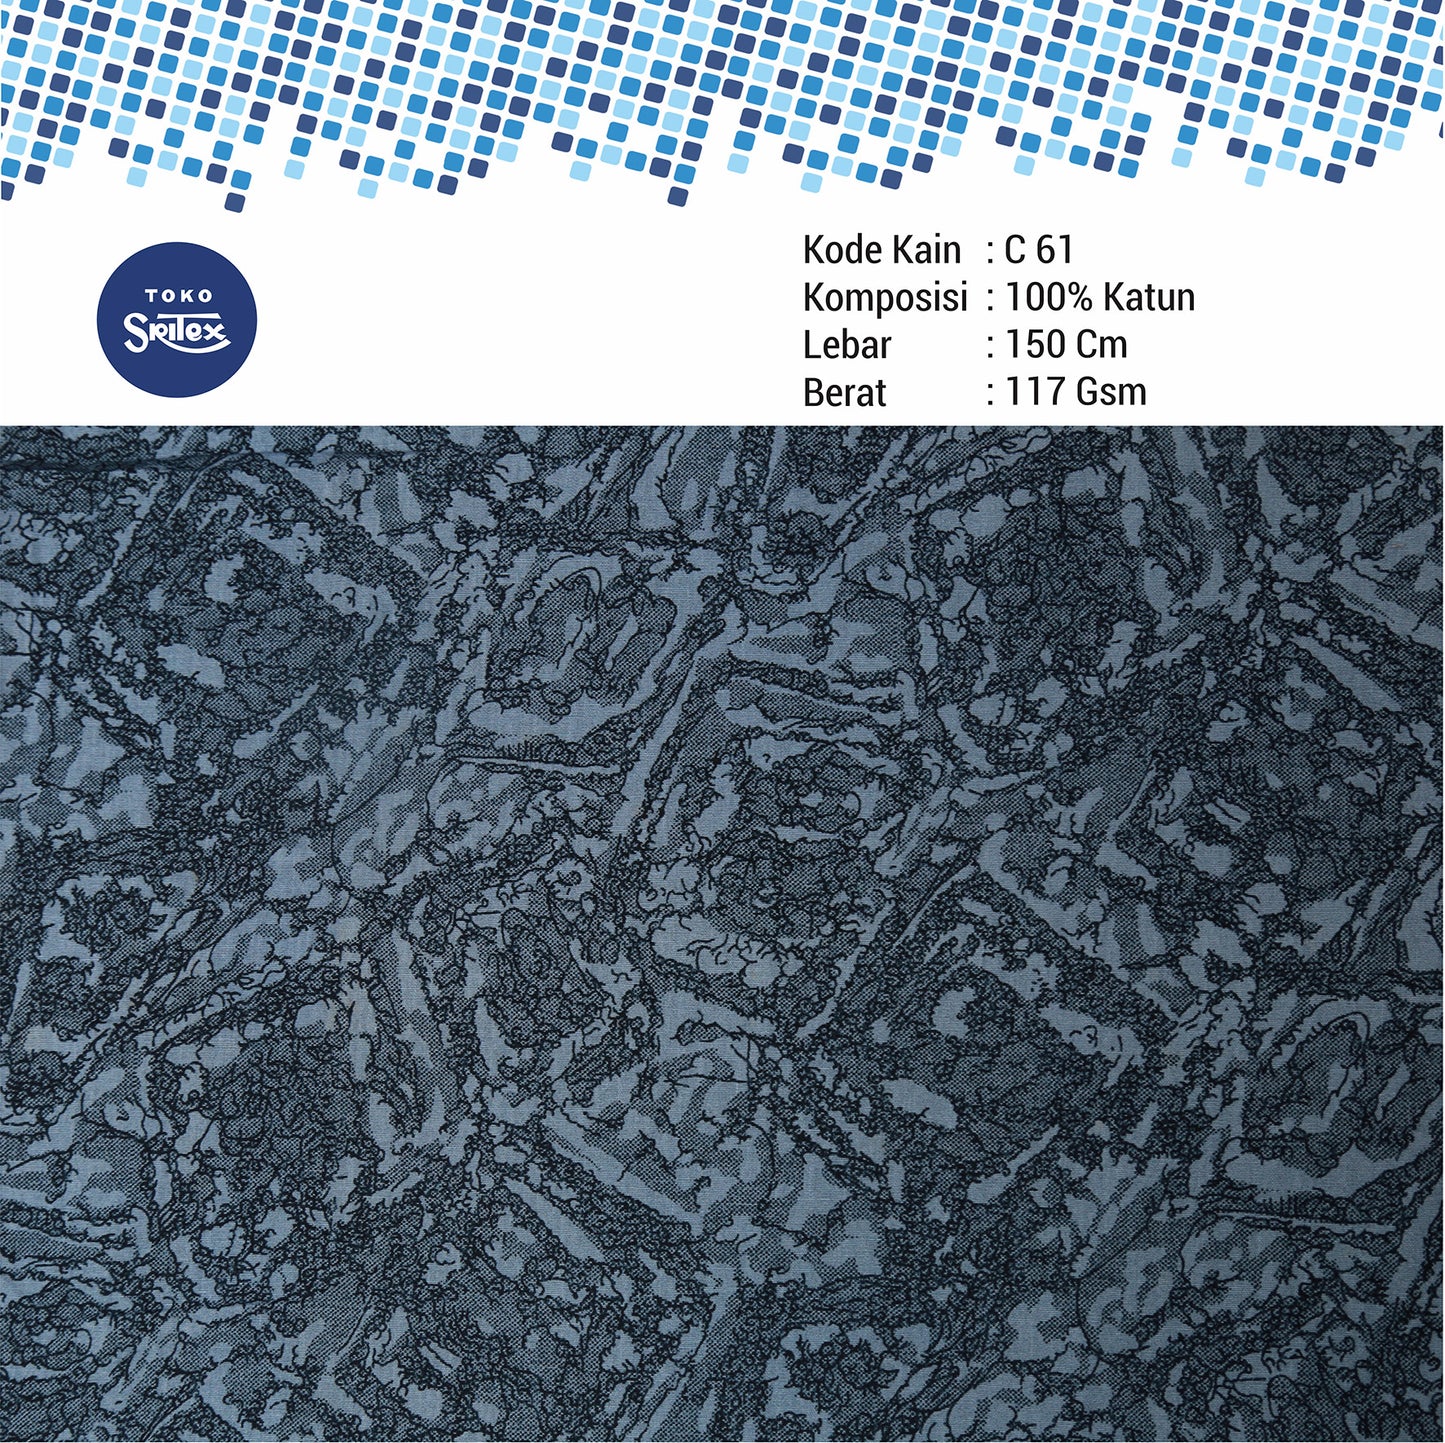 Toko Sritex Kain Katun Print Abstrak Granit Premium Ekspor, C61. Harga per 45cm, Lebar 150cm.